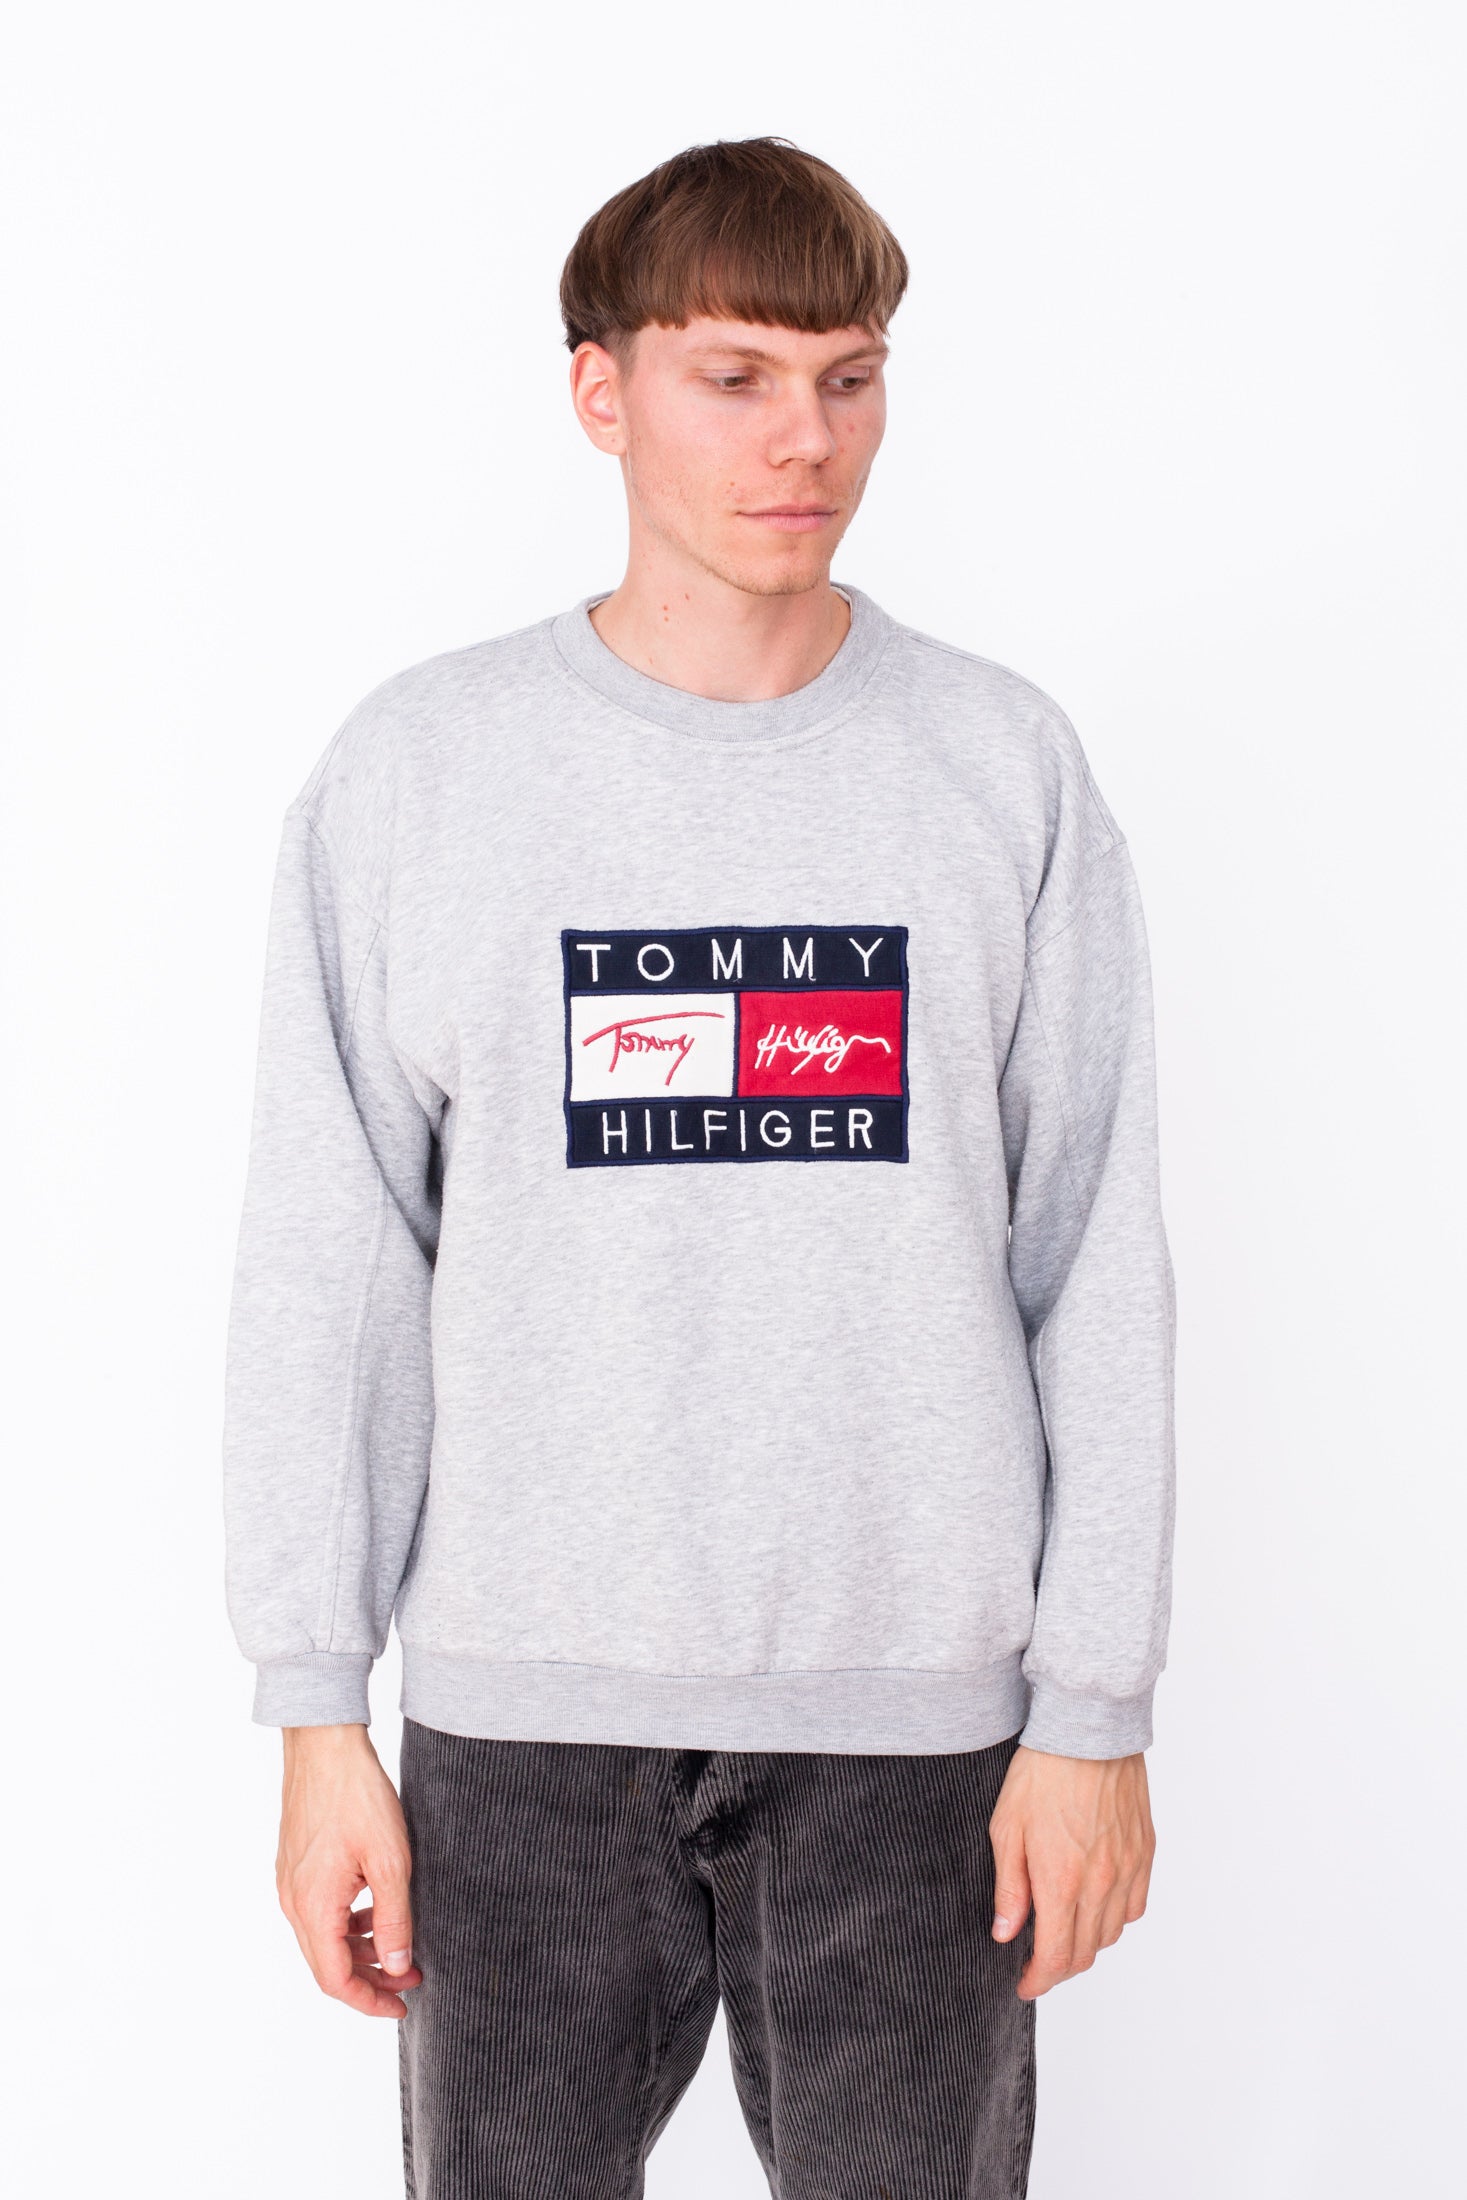 Big 90s Vintage Too Sweet – Not Hilfiger Tommy Logo Sweatshirt RARE